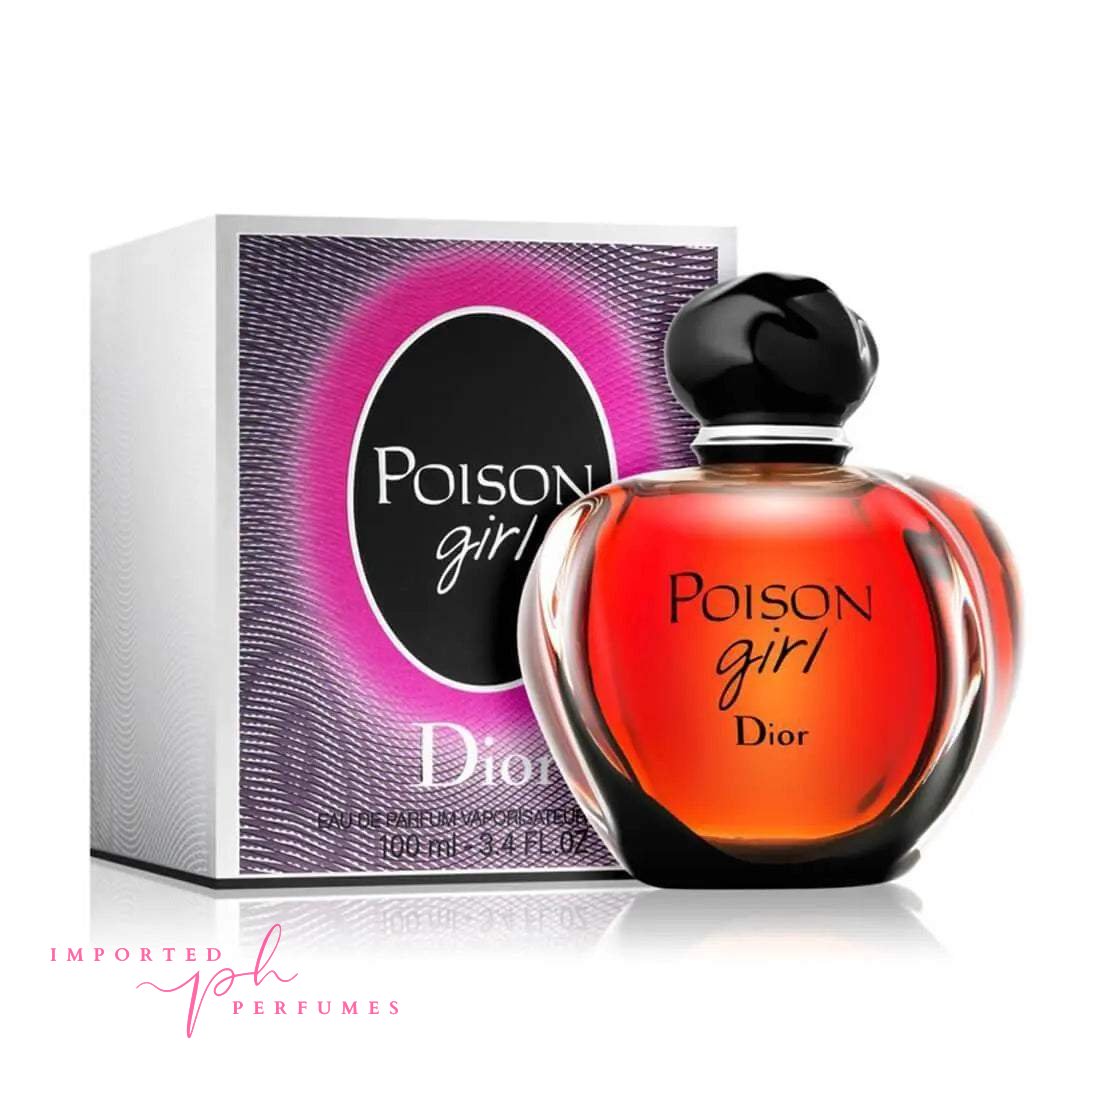 Christian Dior Poison Girl Eau De Parfum For Women 100ml-Imported Perfumes Co-Dior,Poison Girl,Women,Women Perfume